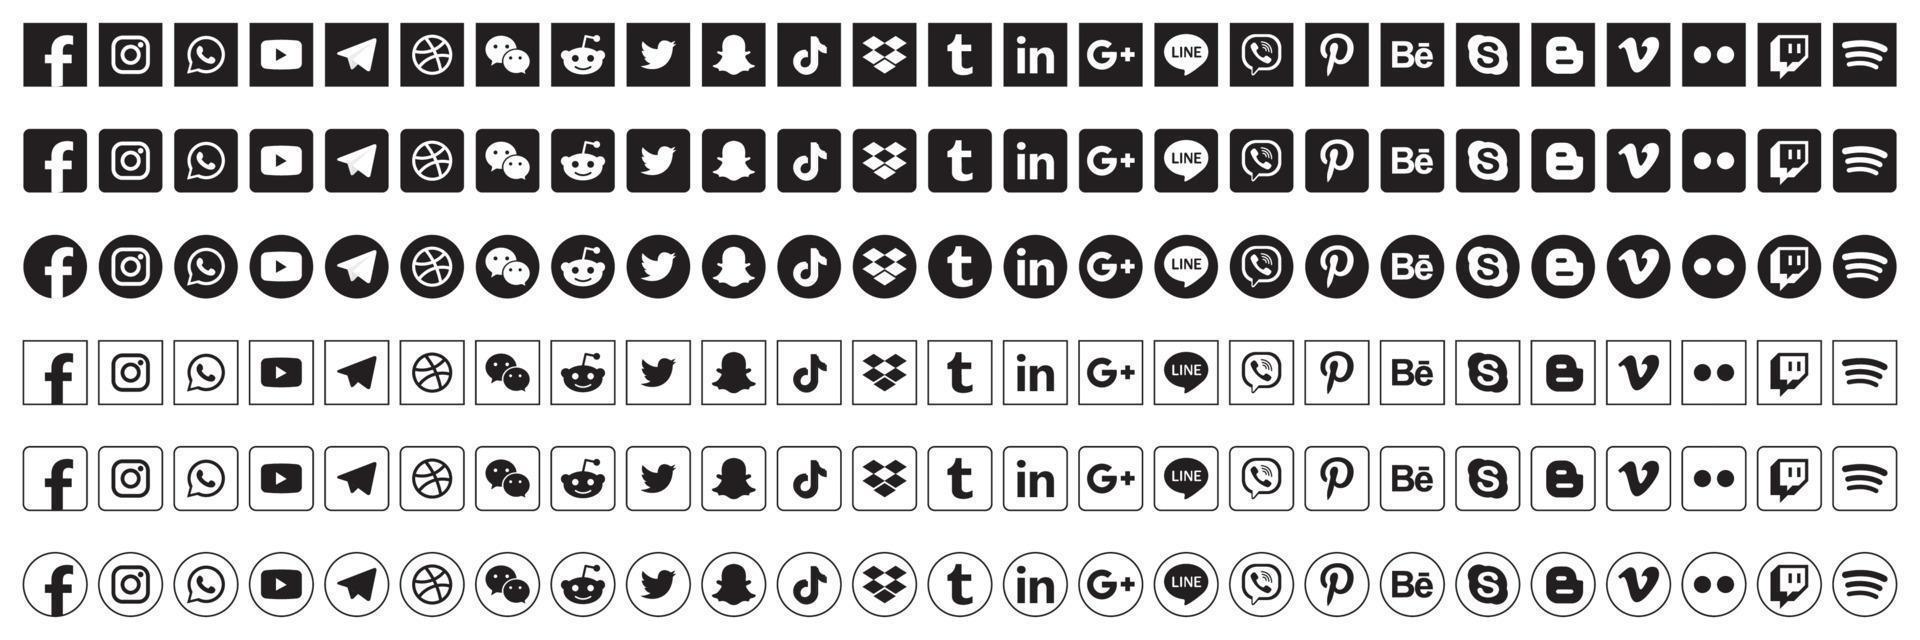 Set popular social media icons. Facebook, instagram, twitter, youtube, pinterest, behance, google, linkedin, whatsap, snapchat and many more. Editorial vector illustration